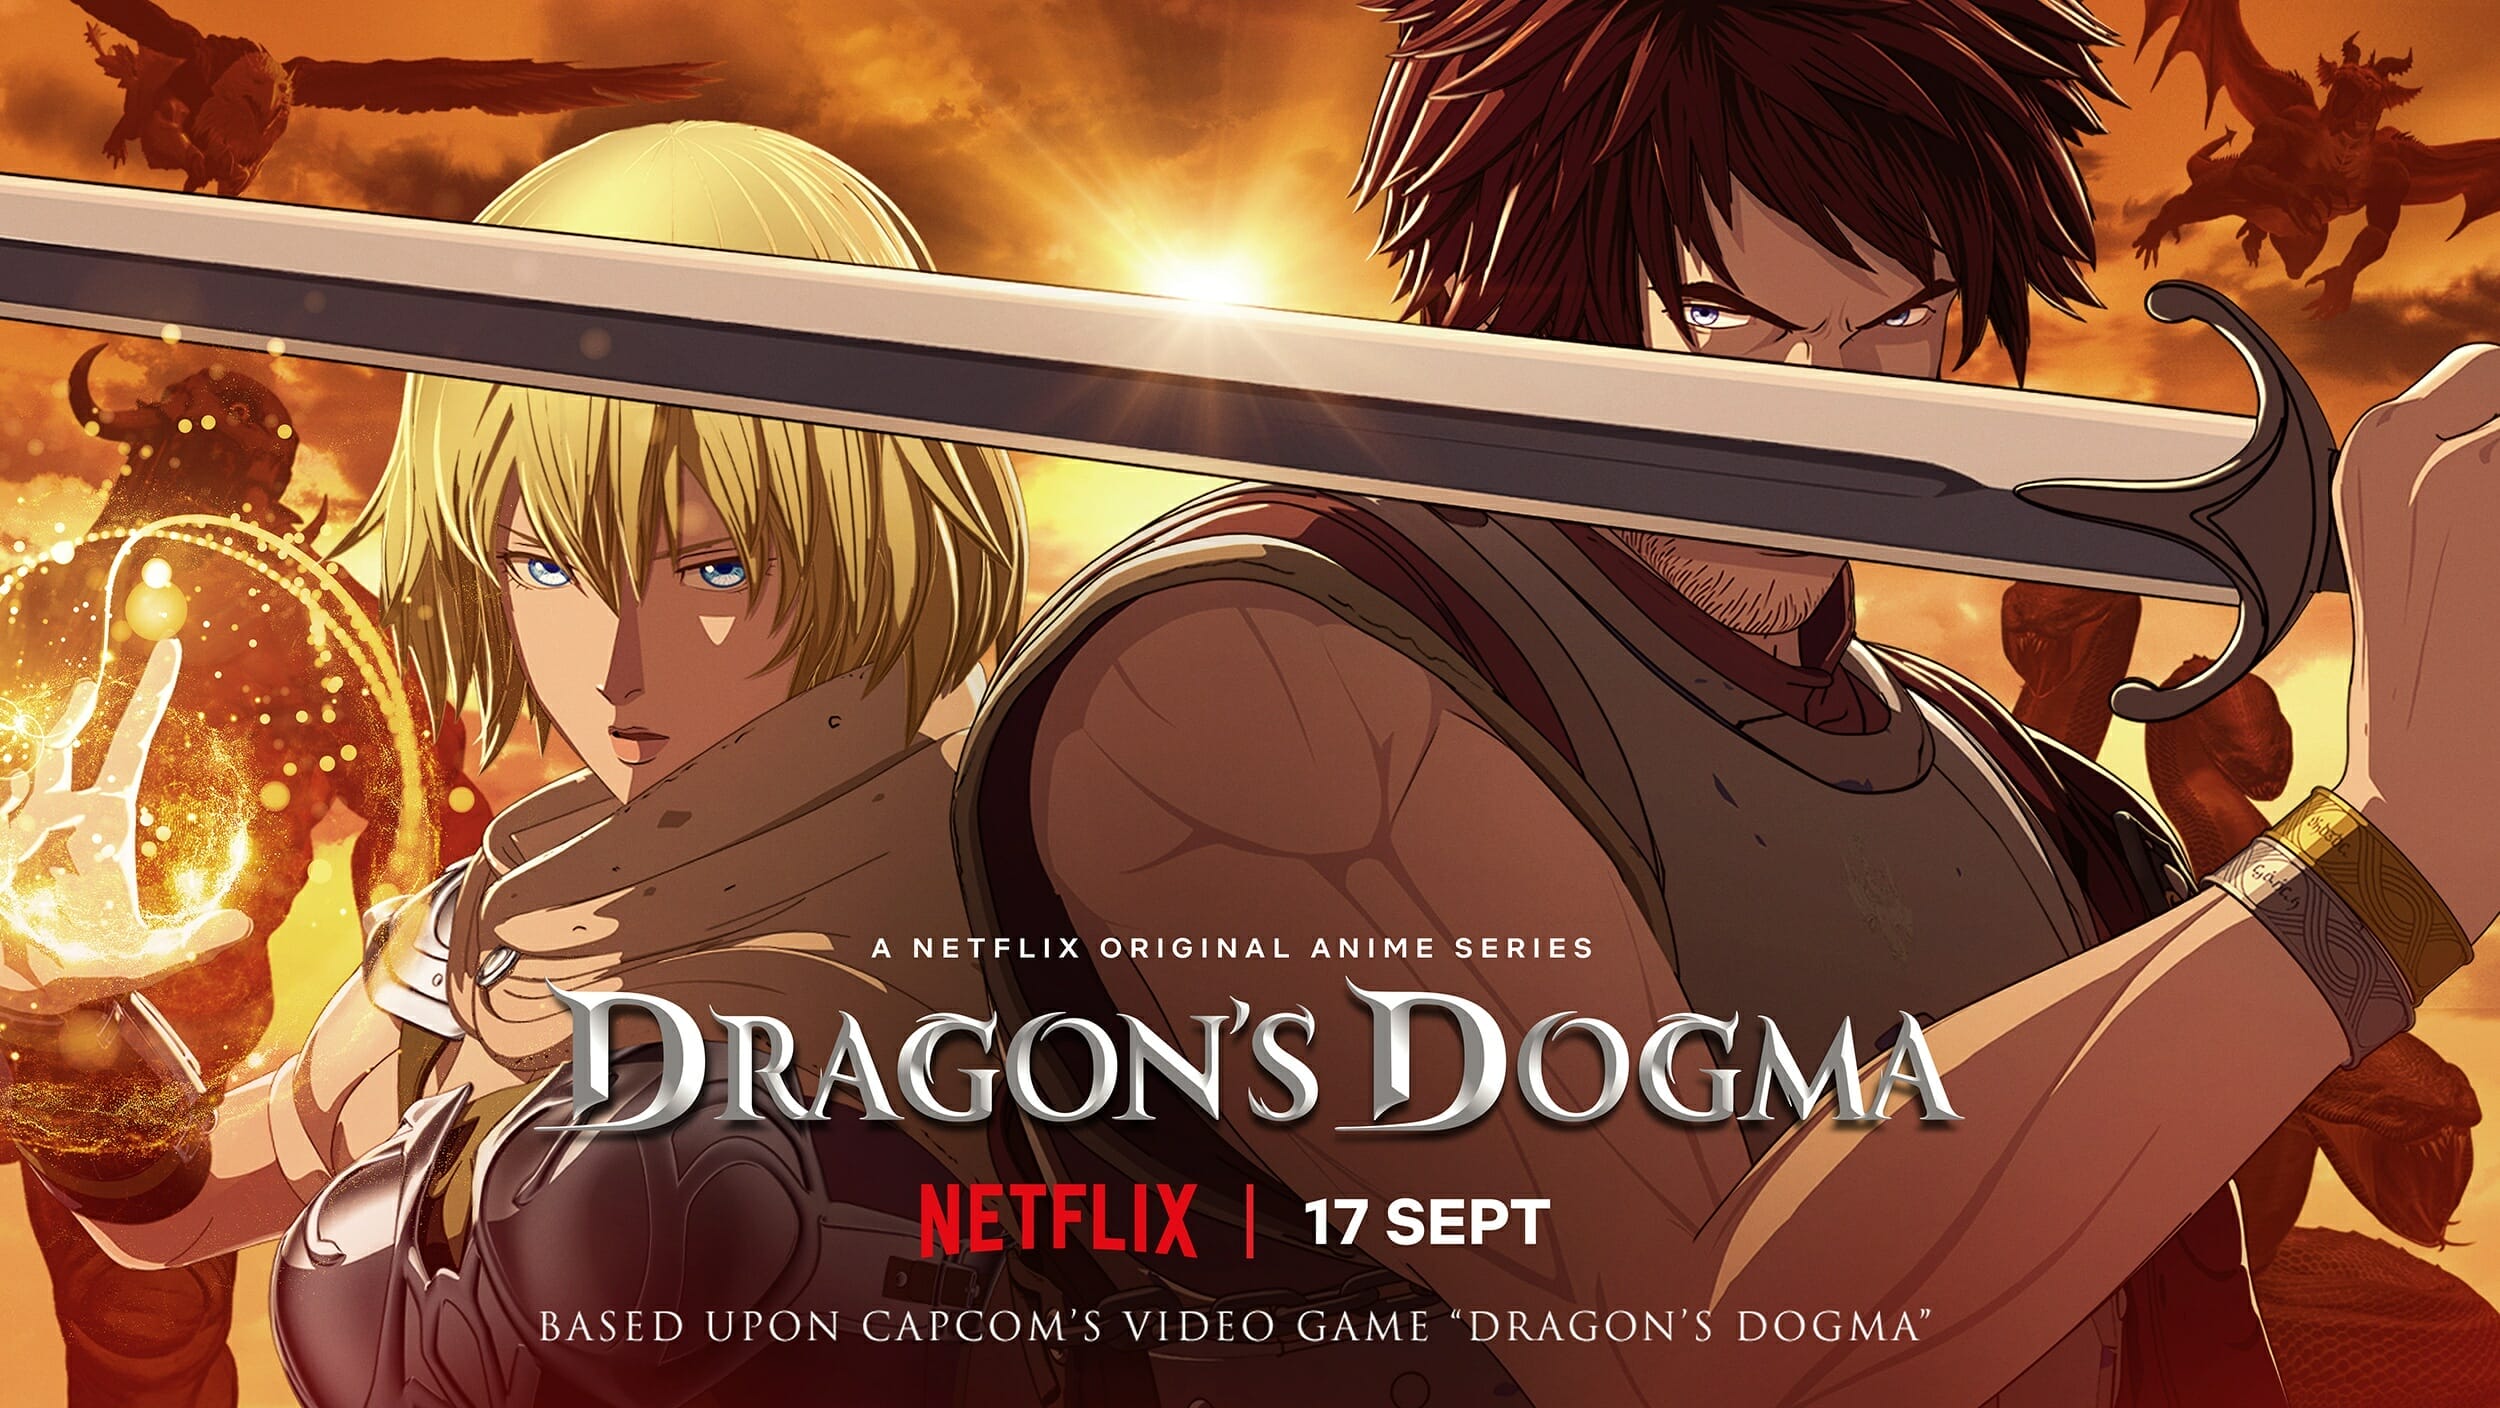 Netflix S Dragon S Dogma Anime Based On The Rpg Gets New Trailer Laptrinhx News